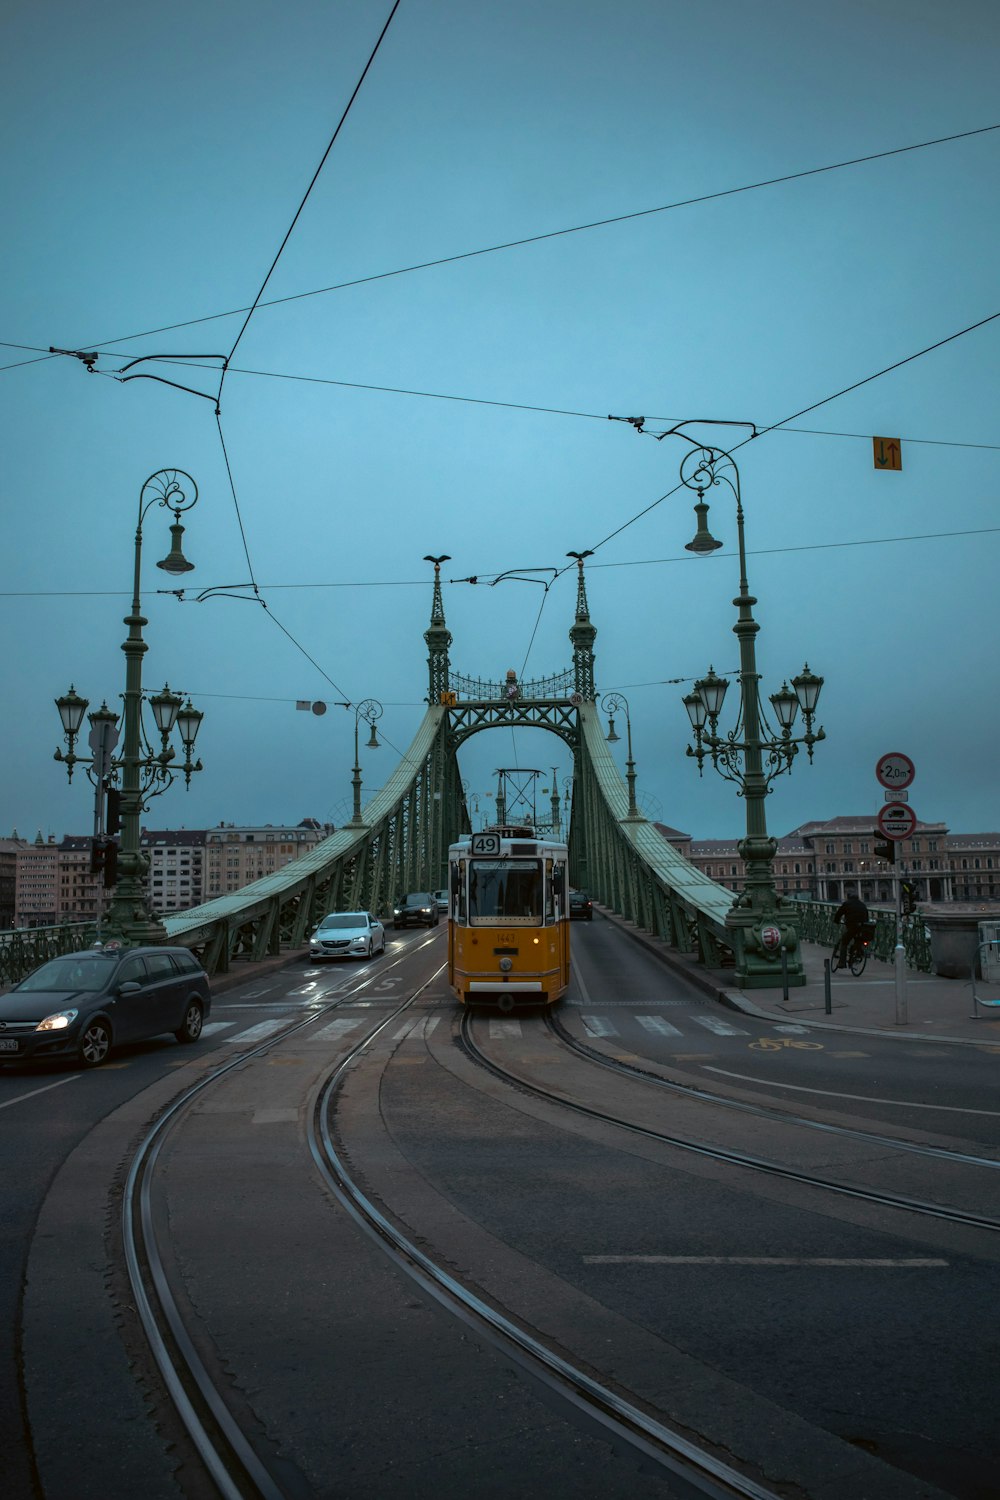 a yellow train traveling across a bridge over a street